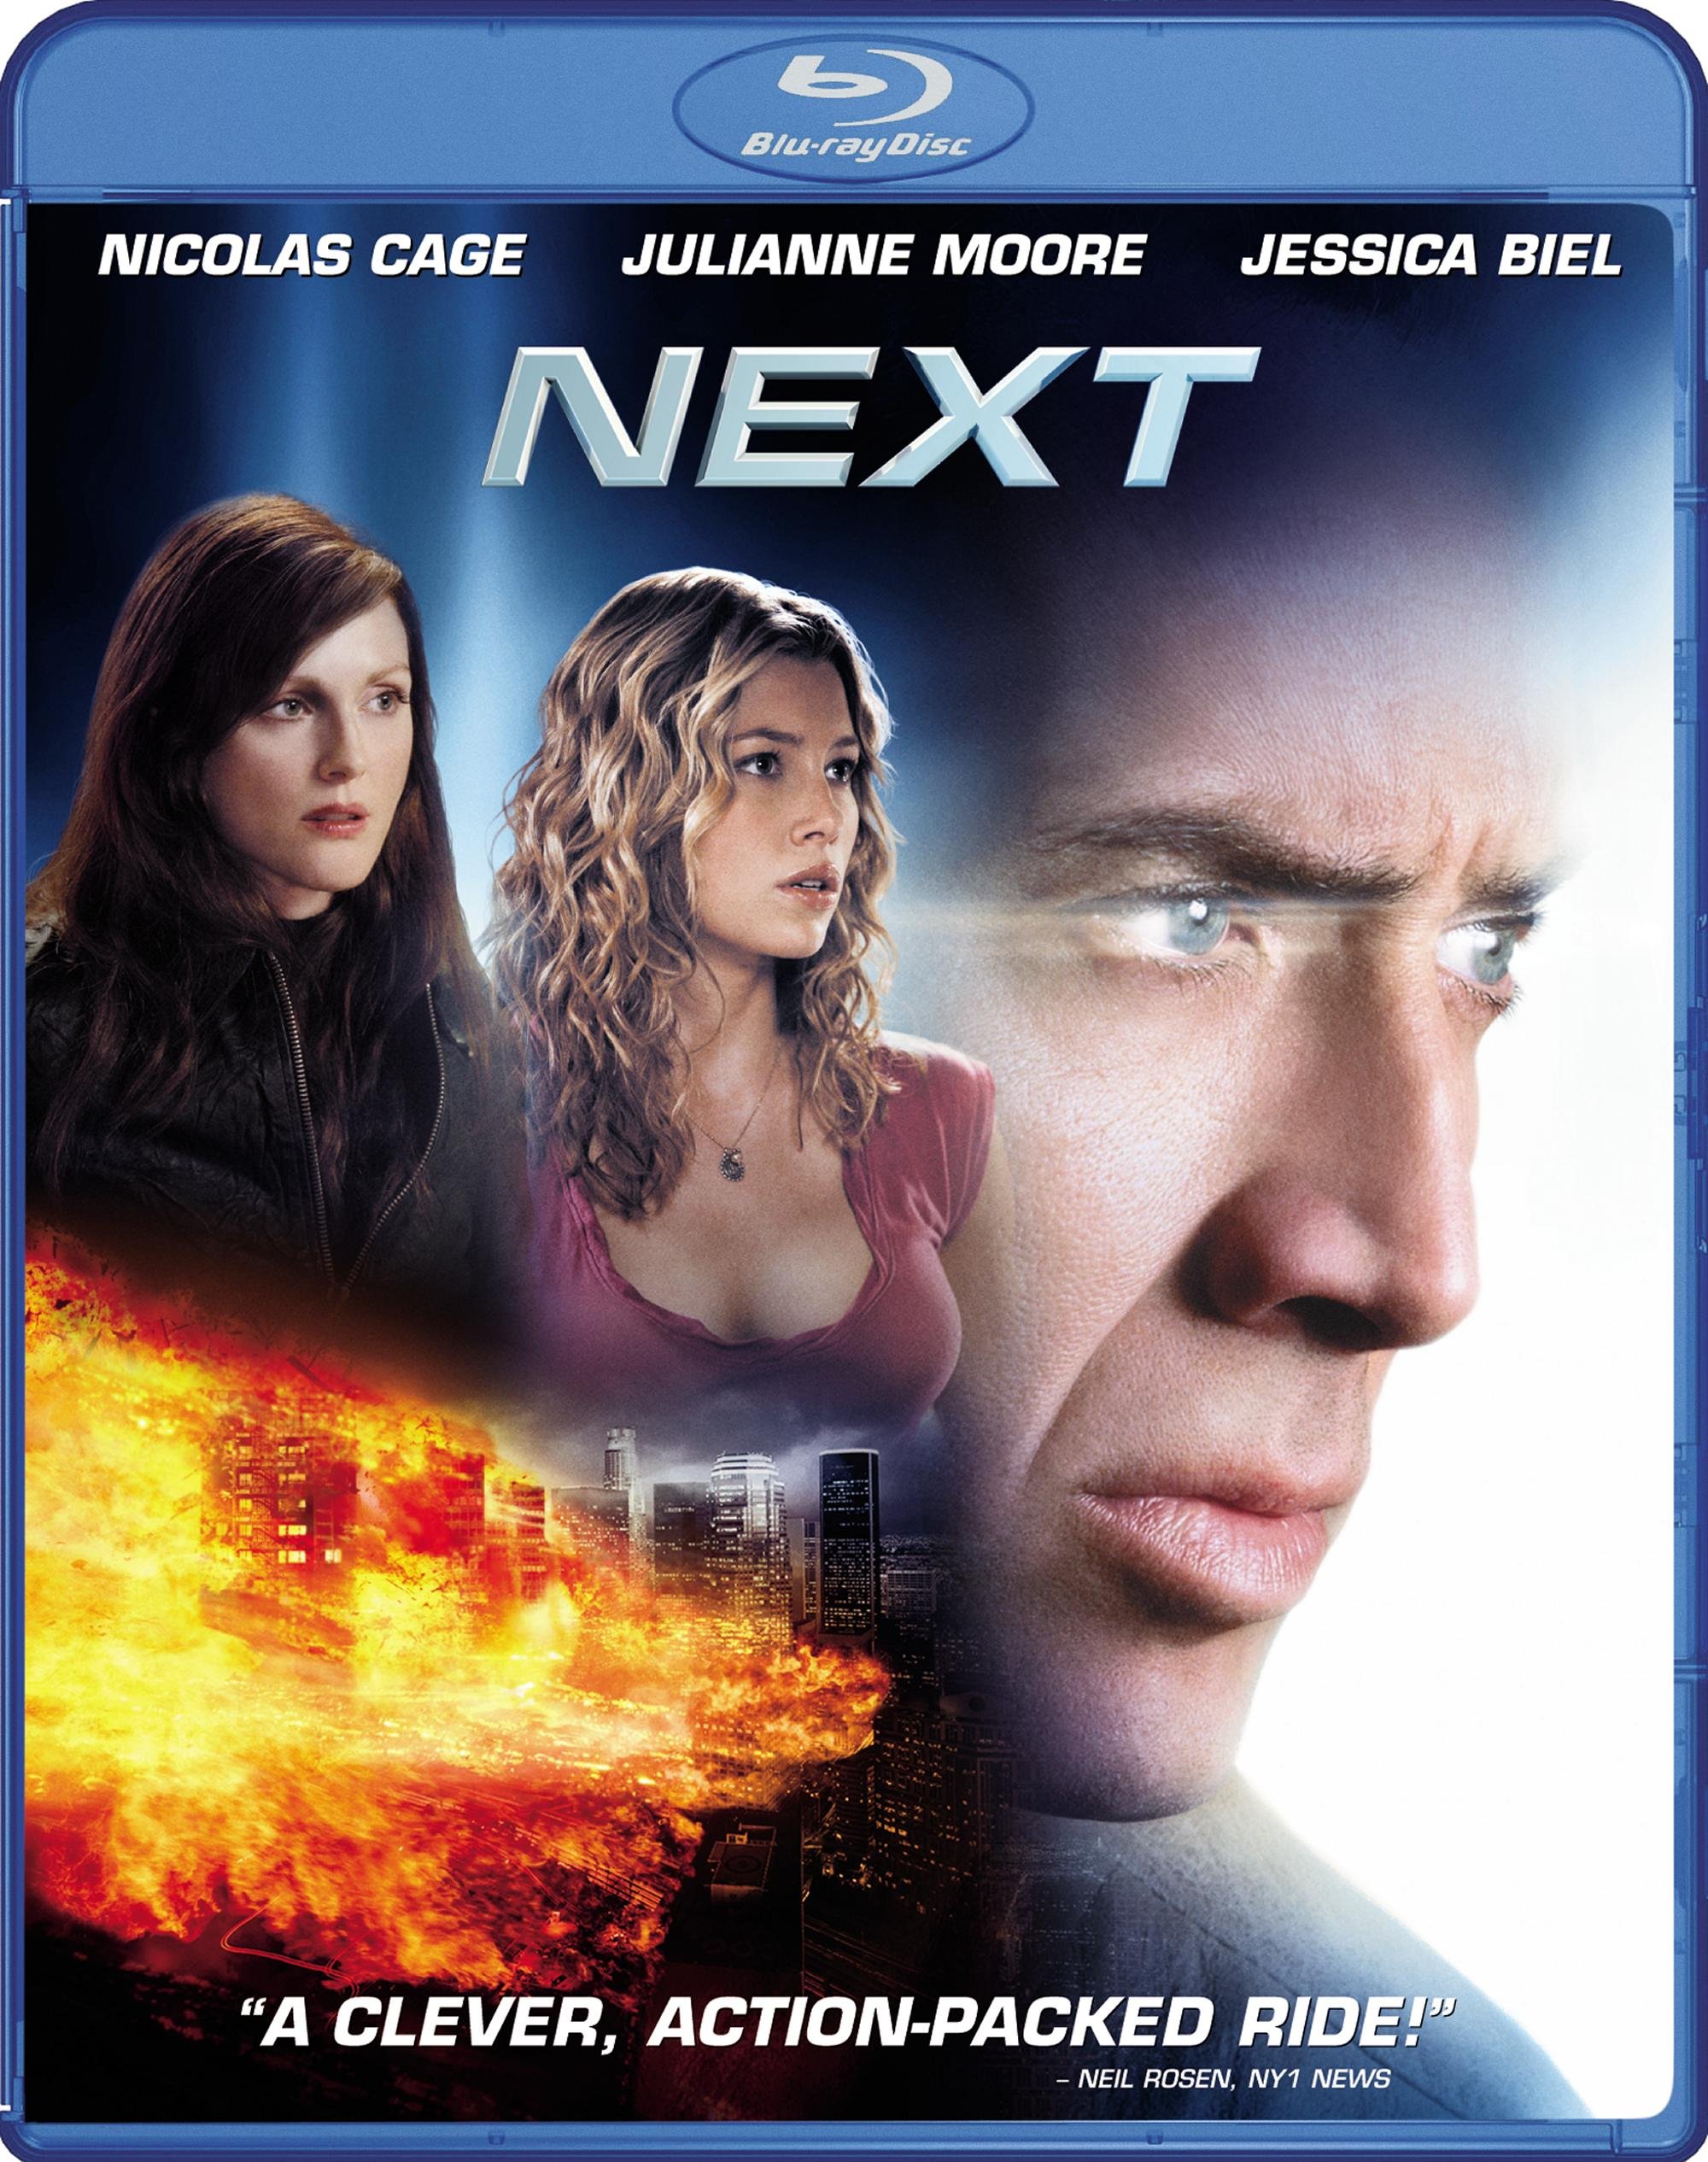 Next Dvd Release Date September 25 2007 #next #next #terrorism #nicolas cage #next #julianne moore #nicolas cage #jessica biel #lee tamahori #next 2007. next dvd release date september 25 2007